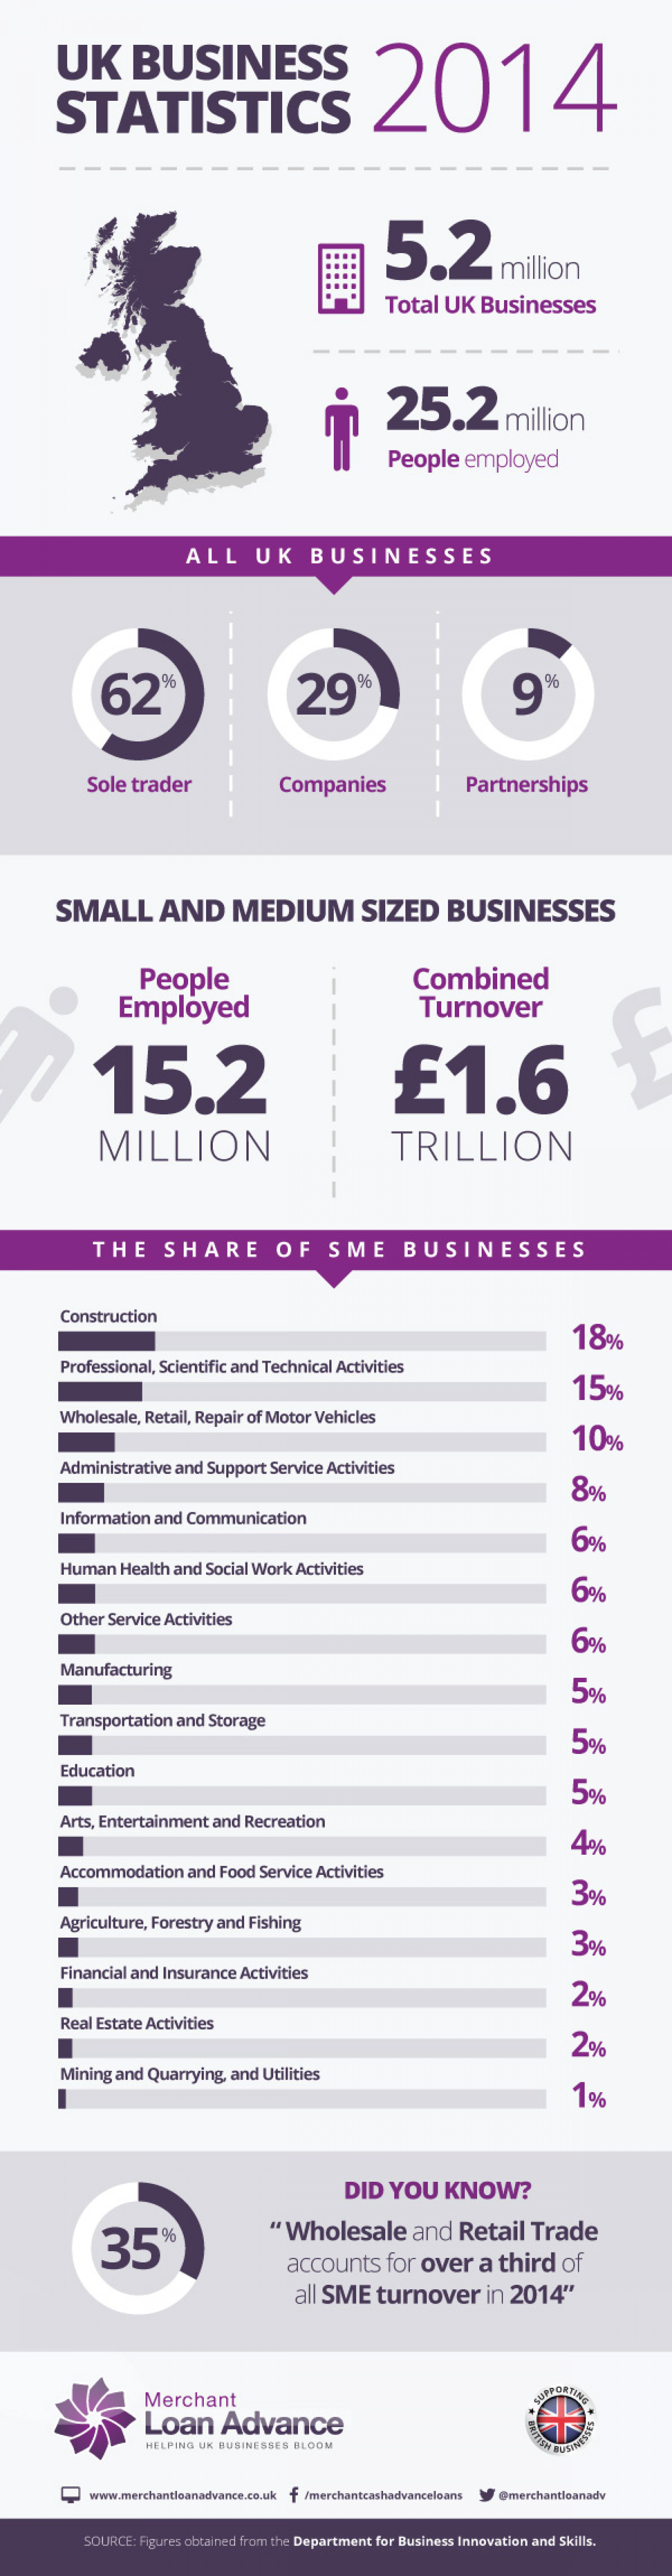 UK Business Statistics Infographic